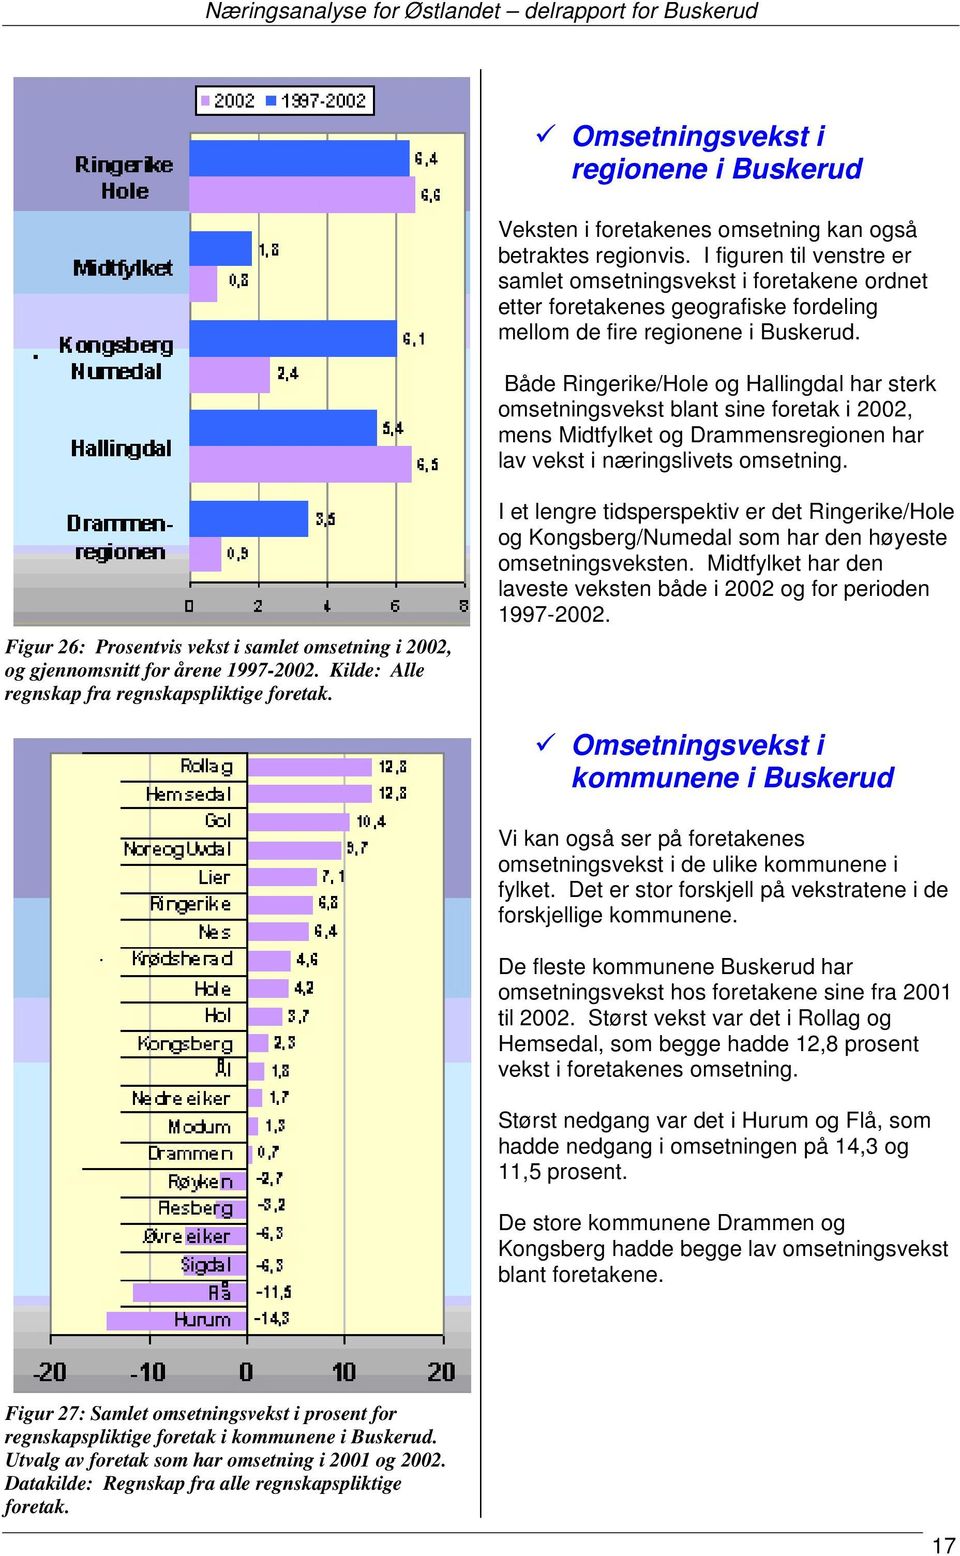 Både Ringerike/Hole og Hallingdal har sterk omsetningsvekst blant sine foretak i 2002, mens Midtfylket og Drammensregionen har lav vekst i næringslivets omsetning.